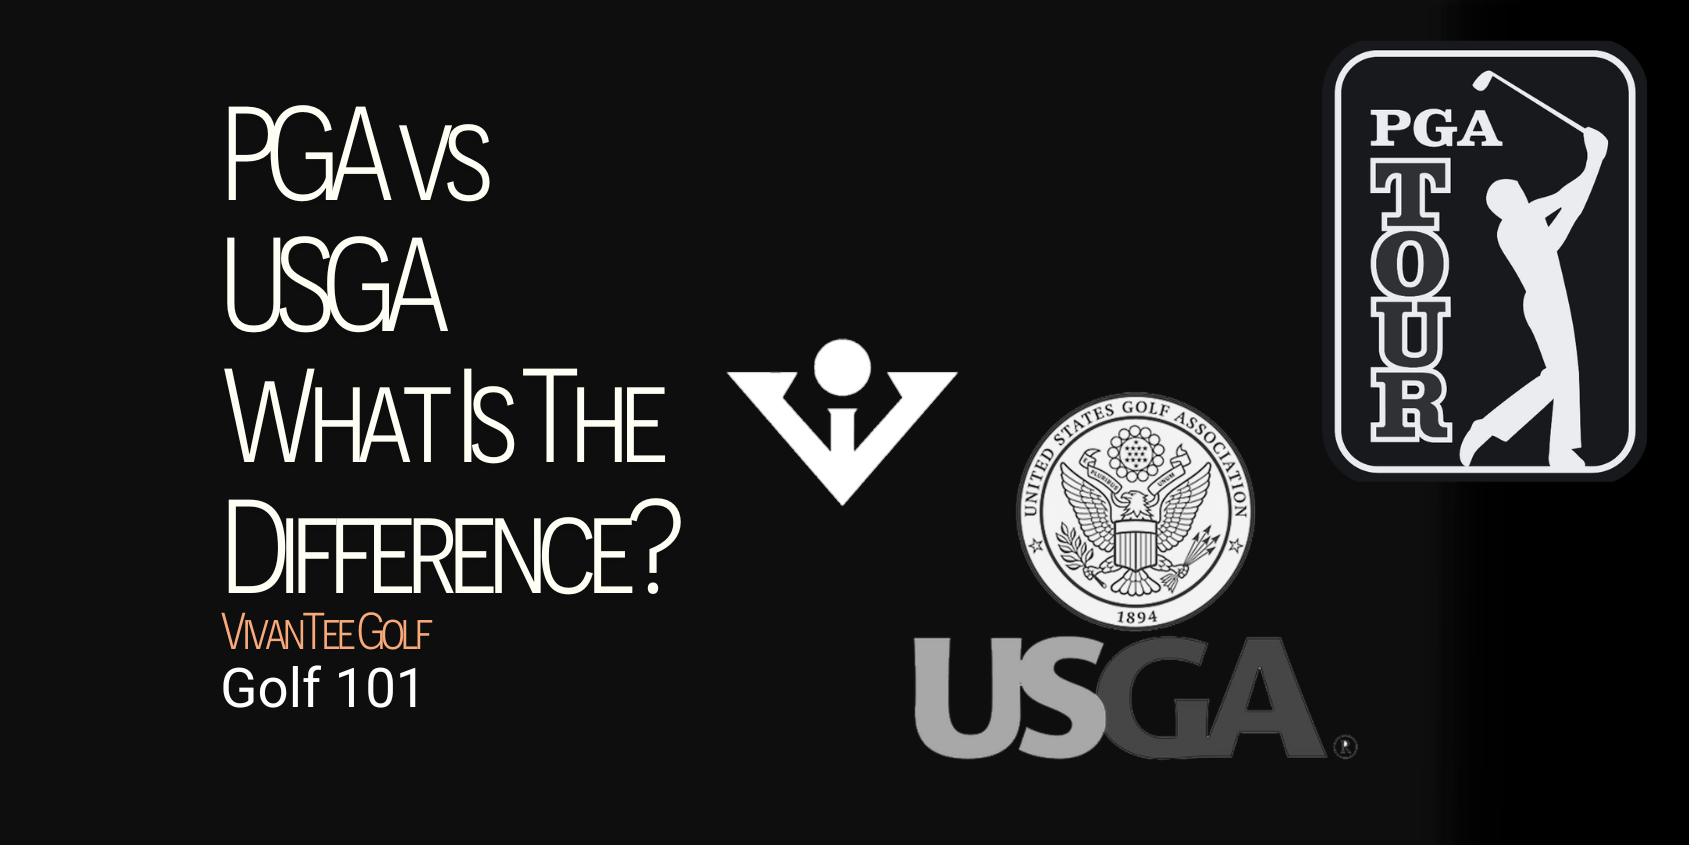 PGA vs USGA image with both brands logos behind our signature Blog Banner.